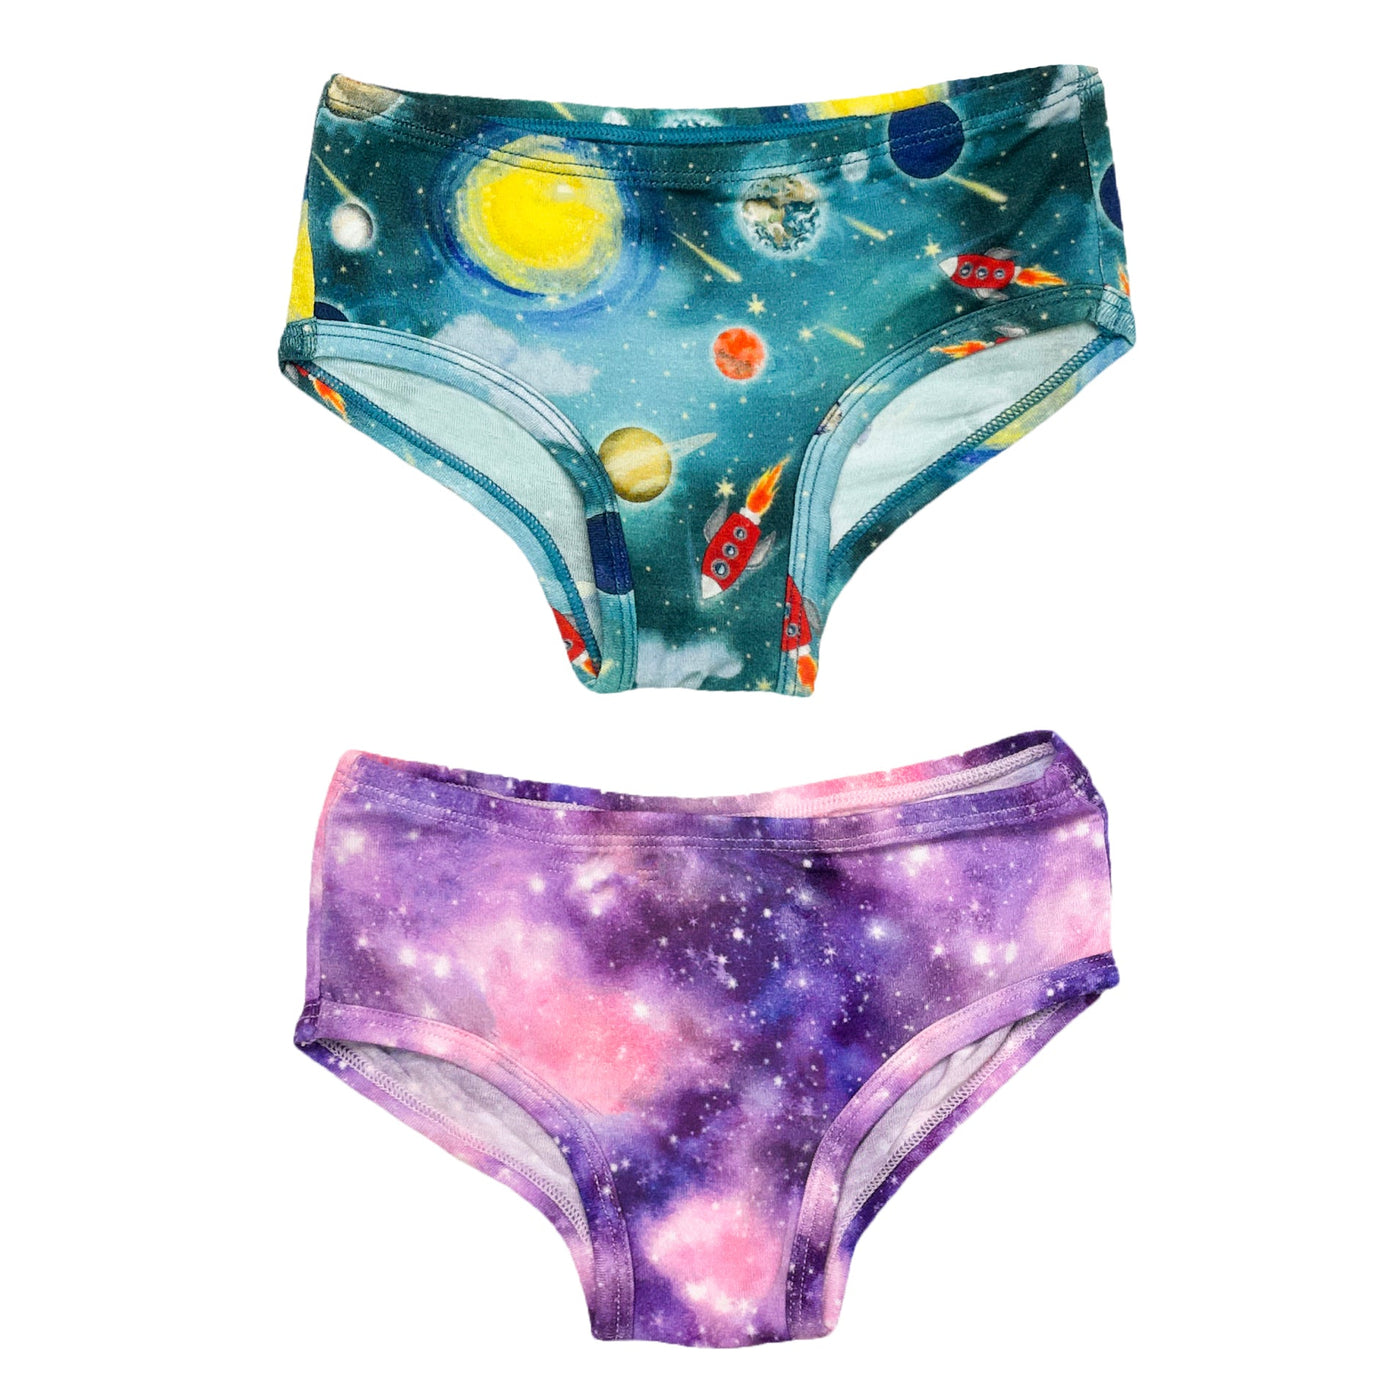 Diamonds in the Sky / Planets Girls Underwear Set of 2 - Free Birdees